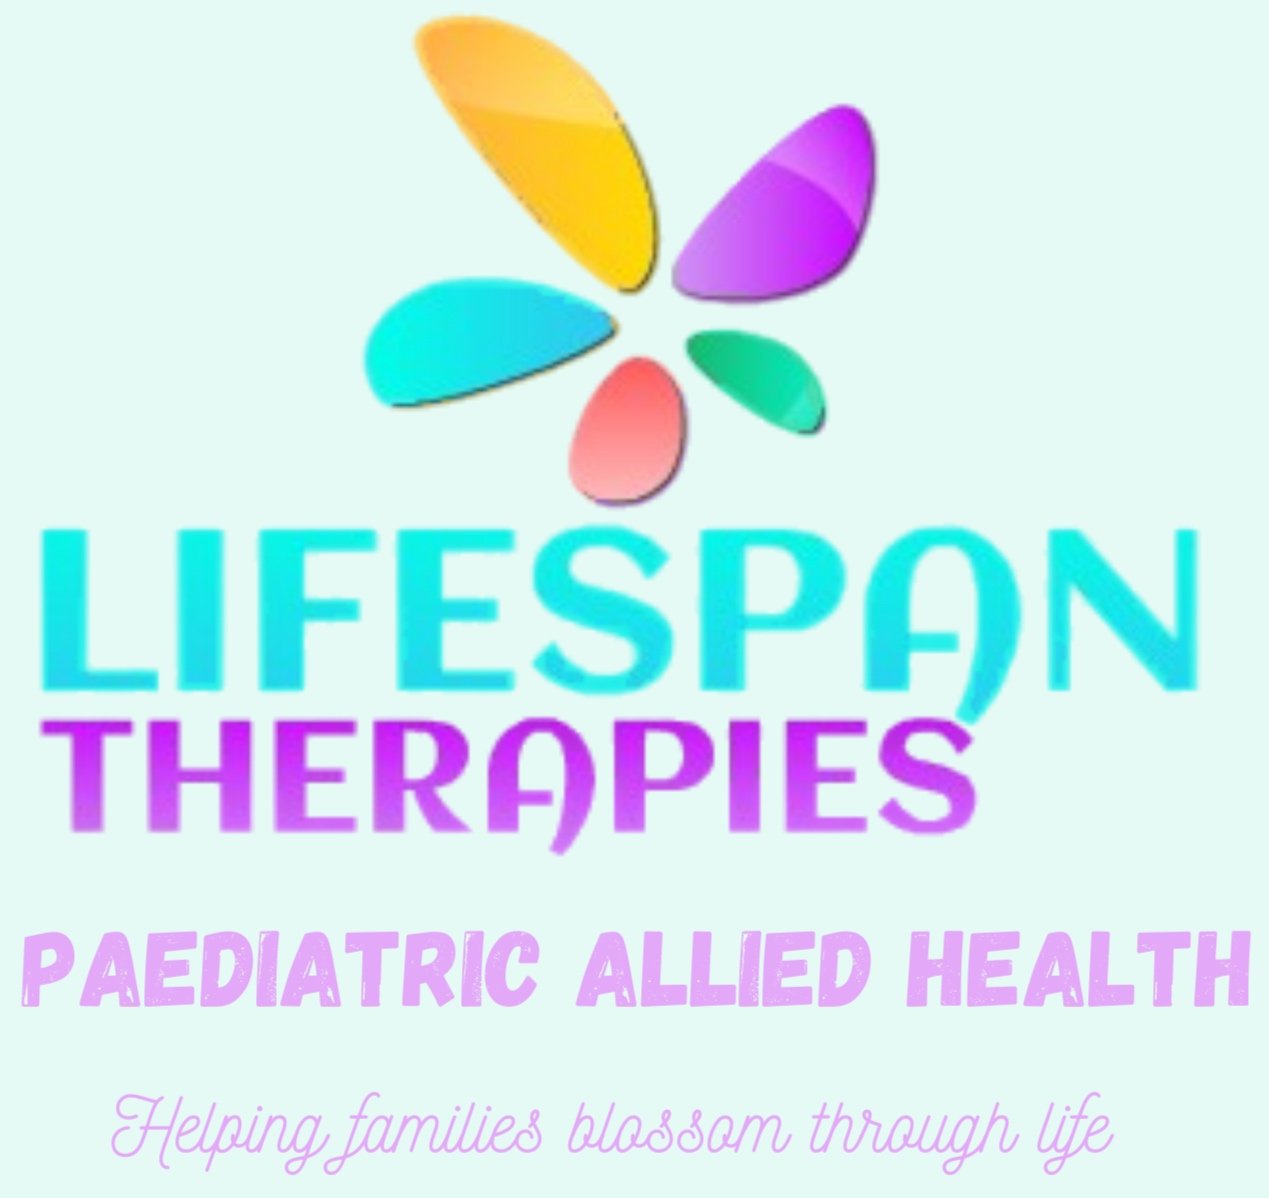 LIFESPAN THERAPIES - PAEDIATRIC ALLIED HEALTH